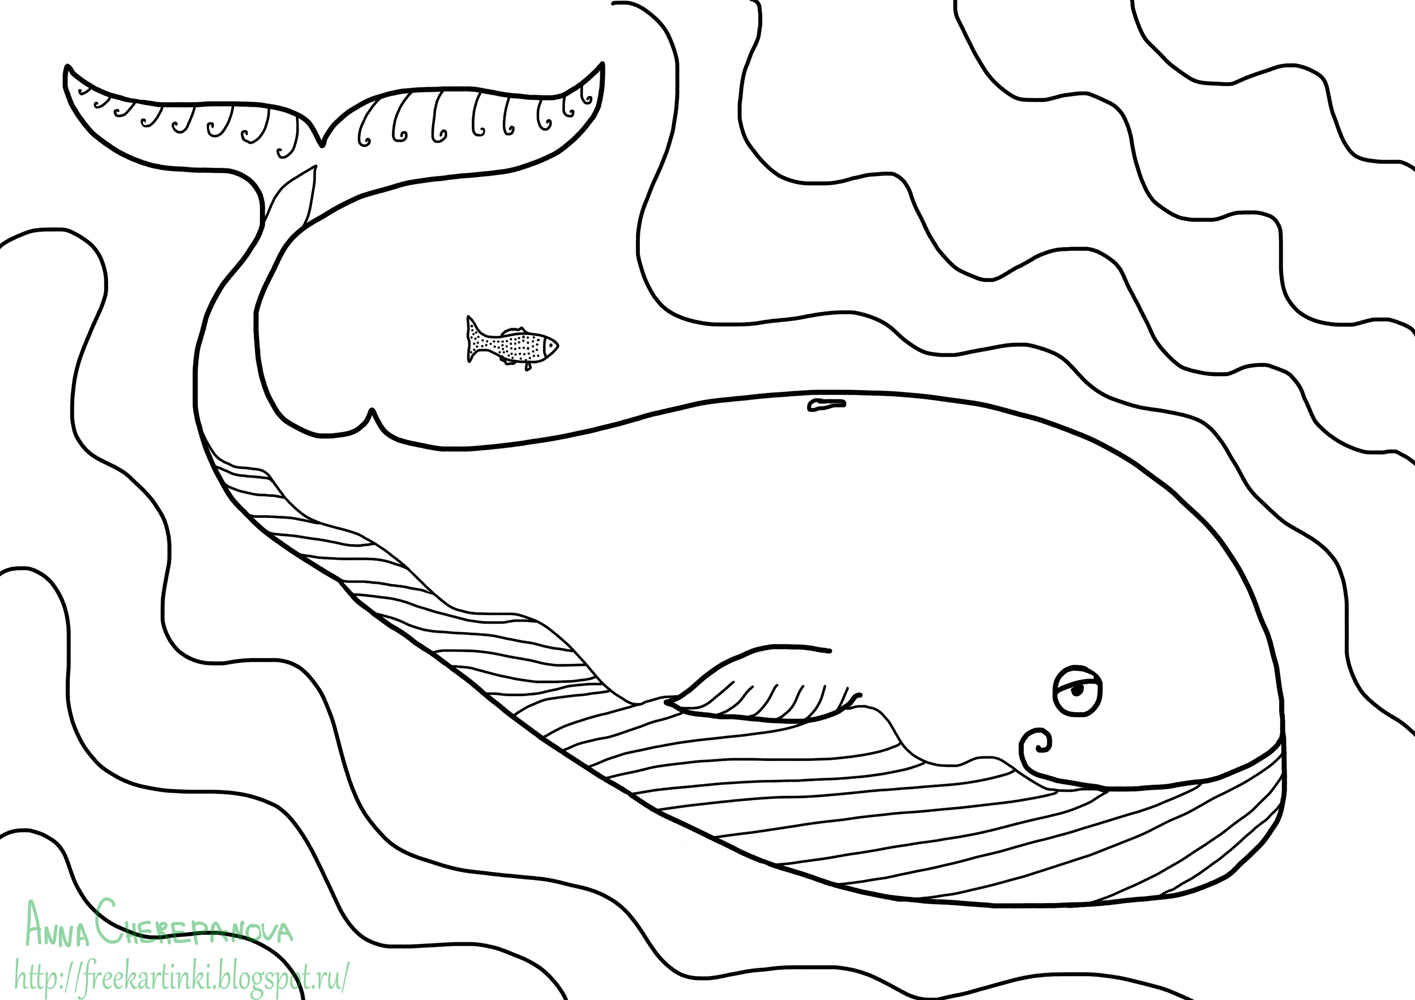 Раскраски на тему окружающий мир. Раскраски с изображениями китов. Раскраски на тему окружающий мир. Раскраски на тему подводного мира. Раскраски на тему кит. Раскраски для детей с изображениями кита. Морской мир. Подводный мир. 